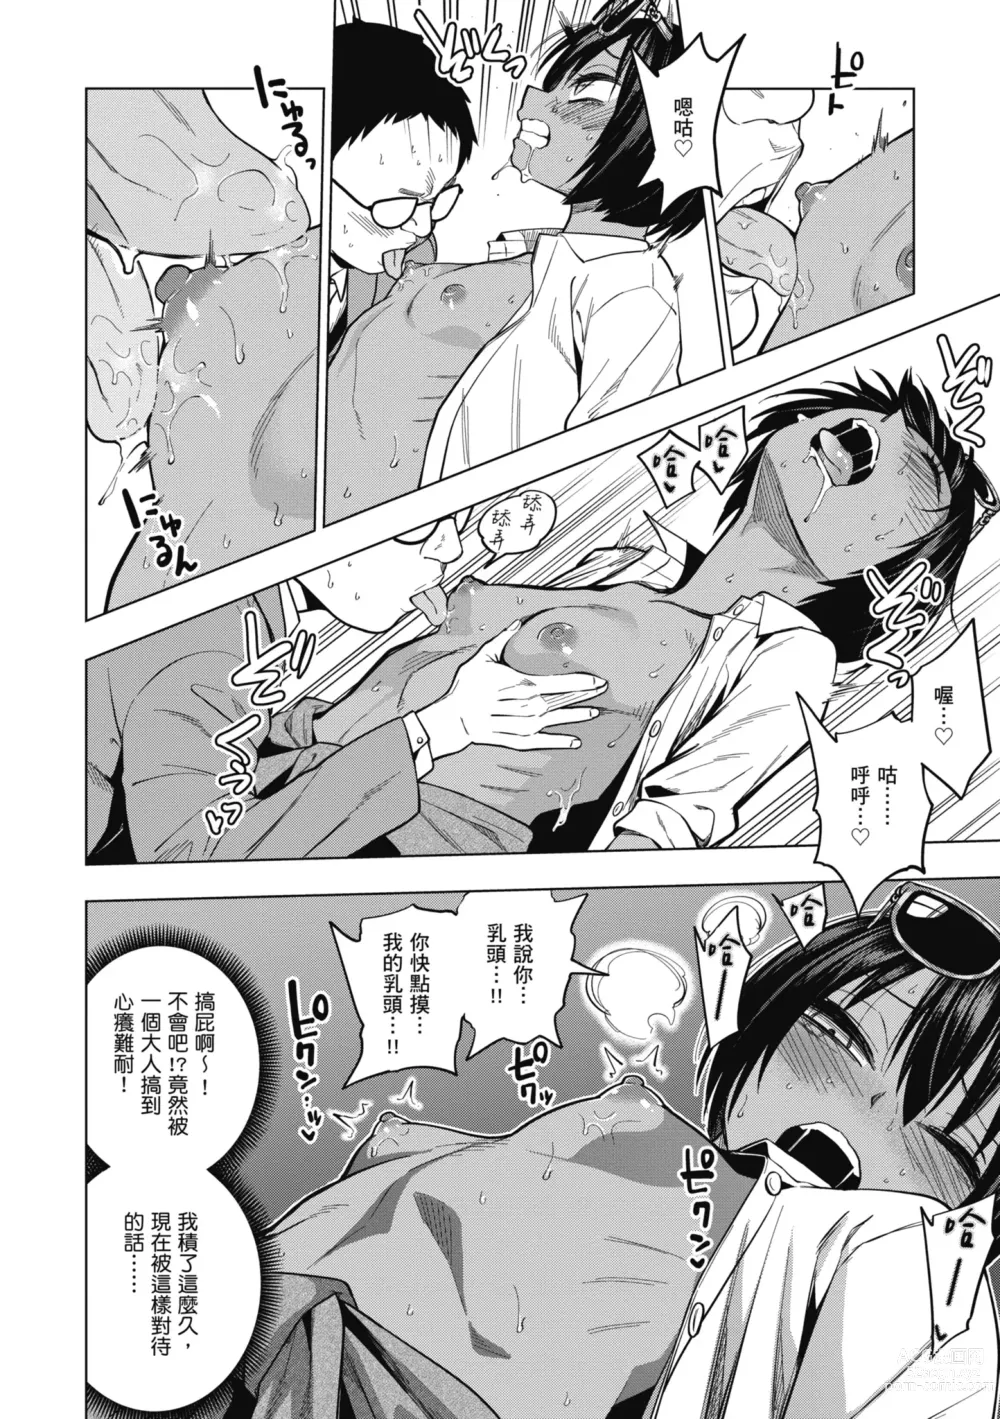 Page 14 of manga Fxxk Street Girls (decensored)